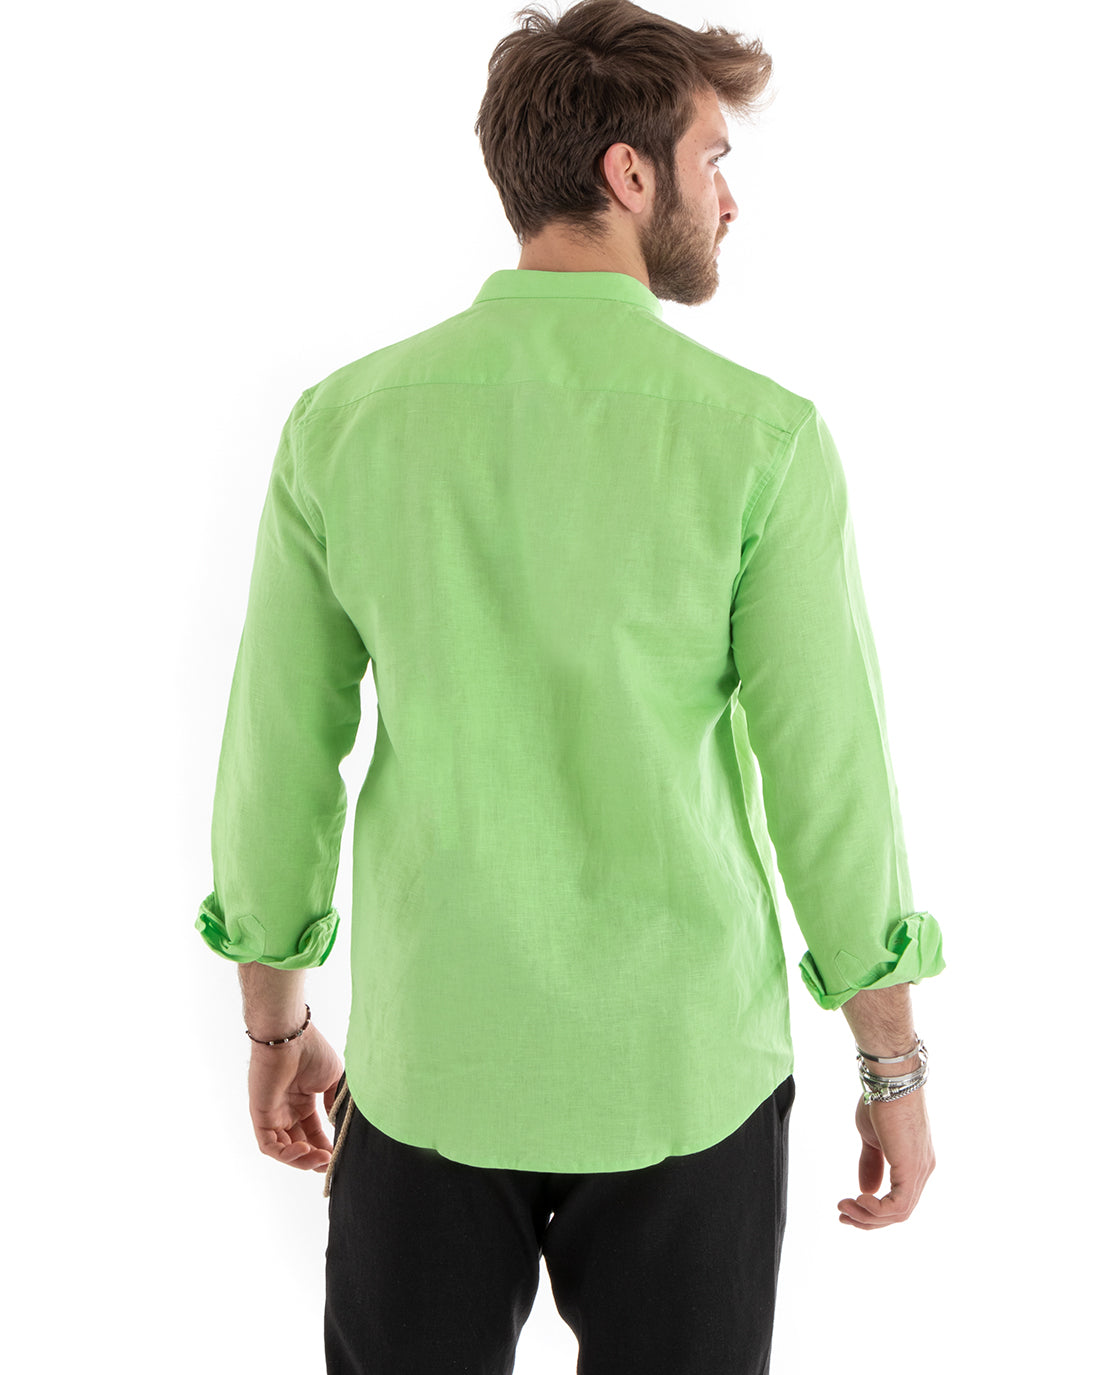 Camicia Uomo Collo Coreano Manica Lunga Lino Tinta Unita Sartoriale Verde Acido GIOSAL-C2671A